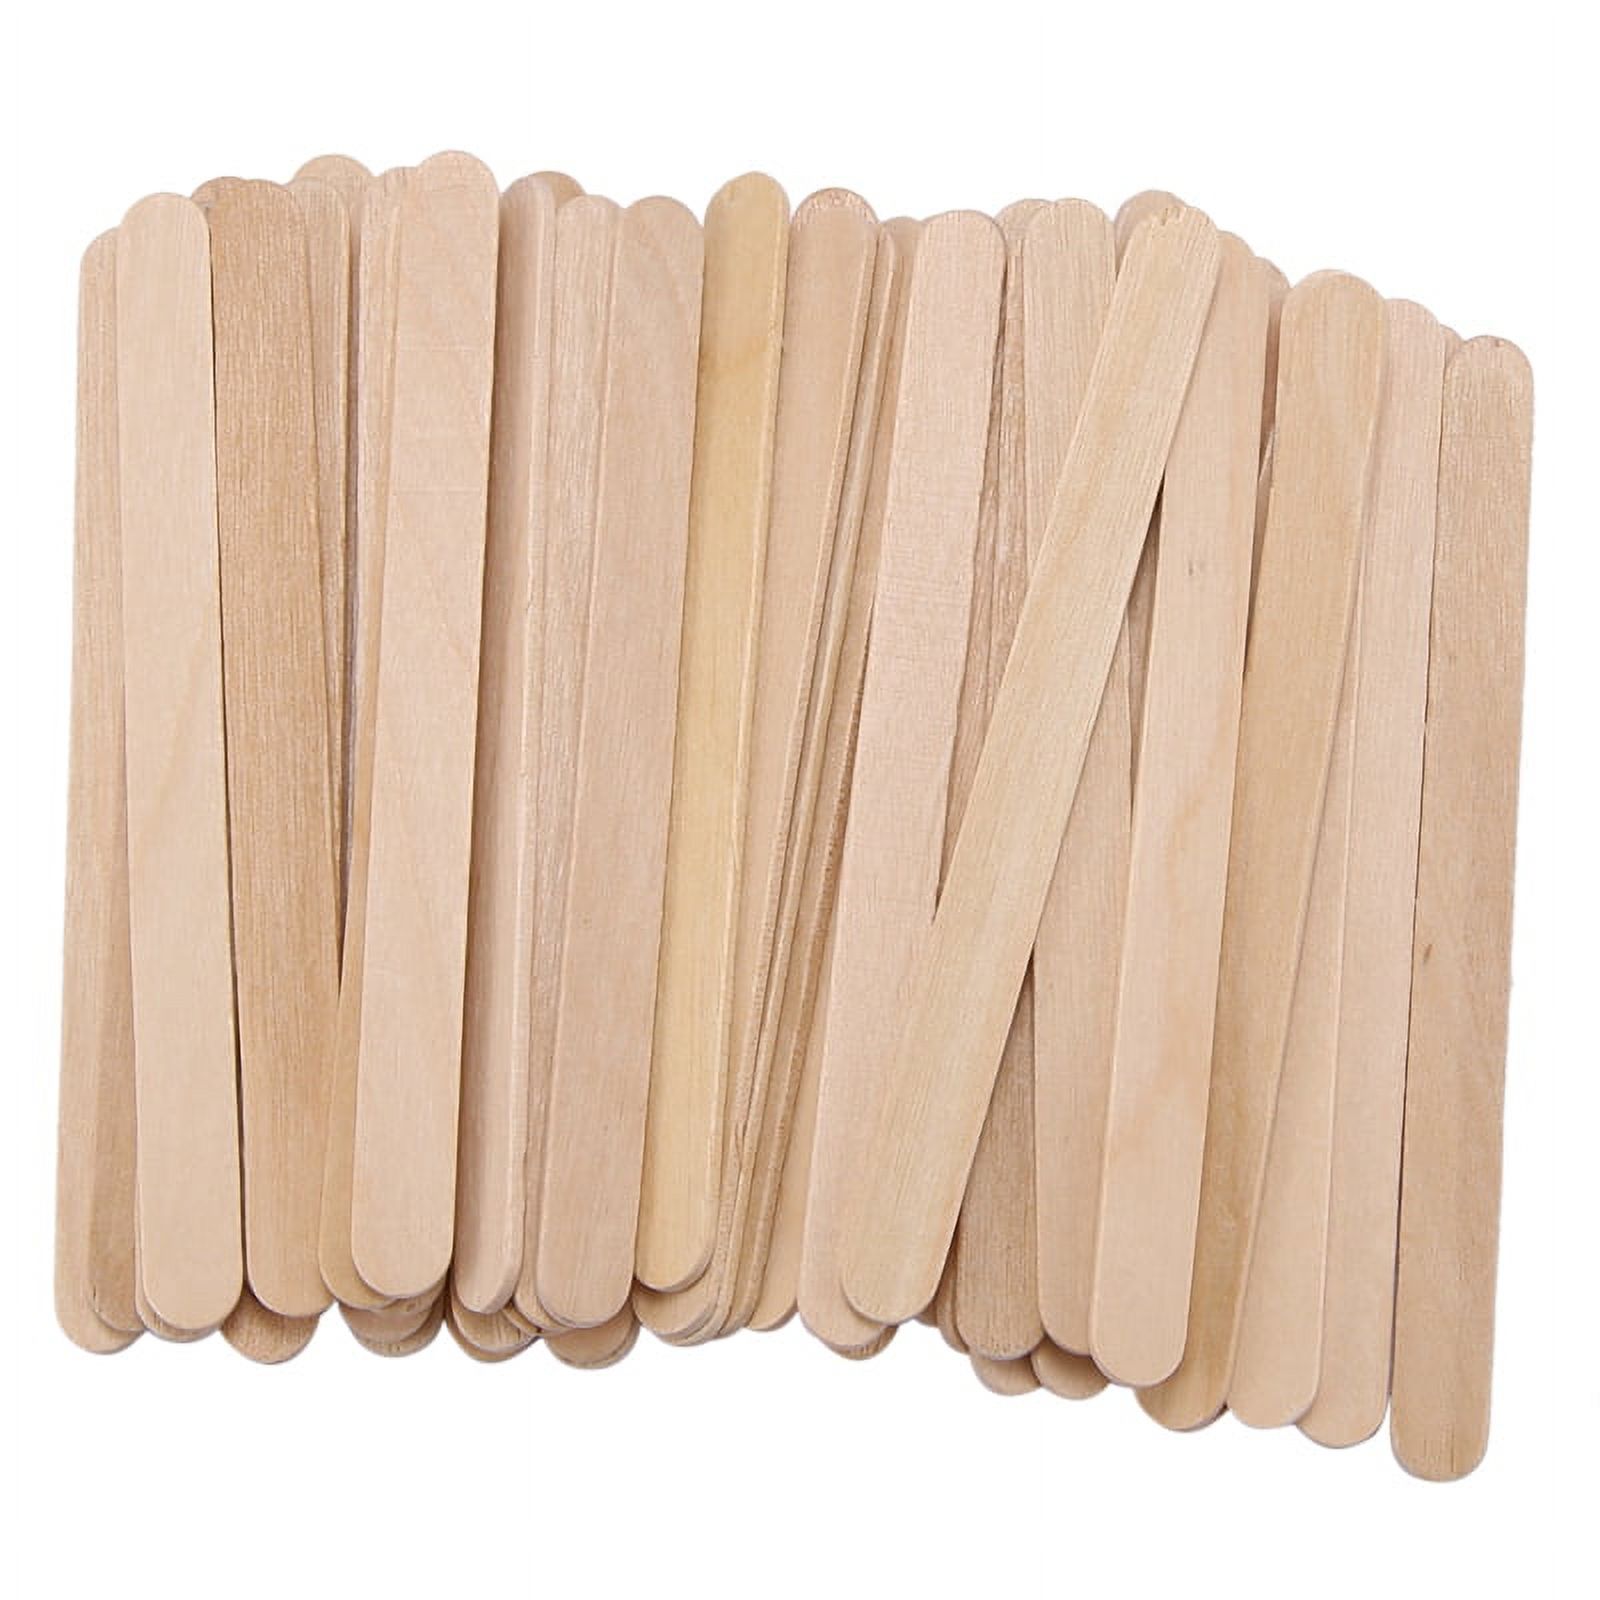 200 Pcs Craft Sticks Ice Cream Sticks Wooden Popsicle Sticks 114MM Length Treat Sticks Ice Sticks - image 1 of 5